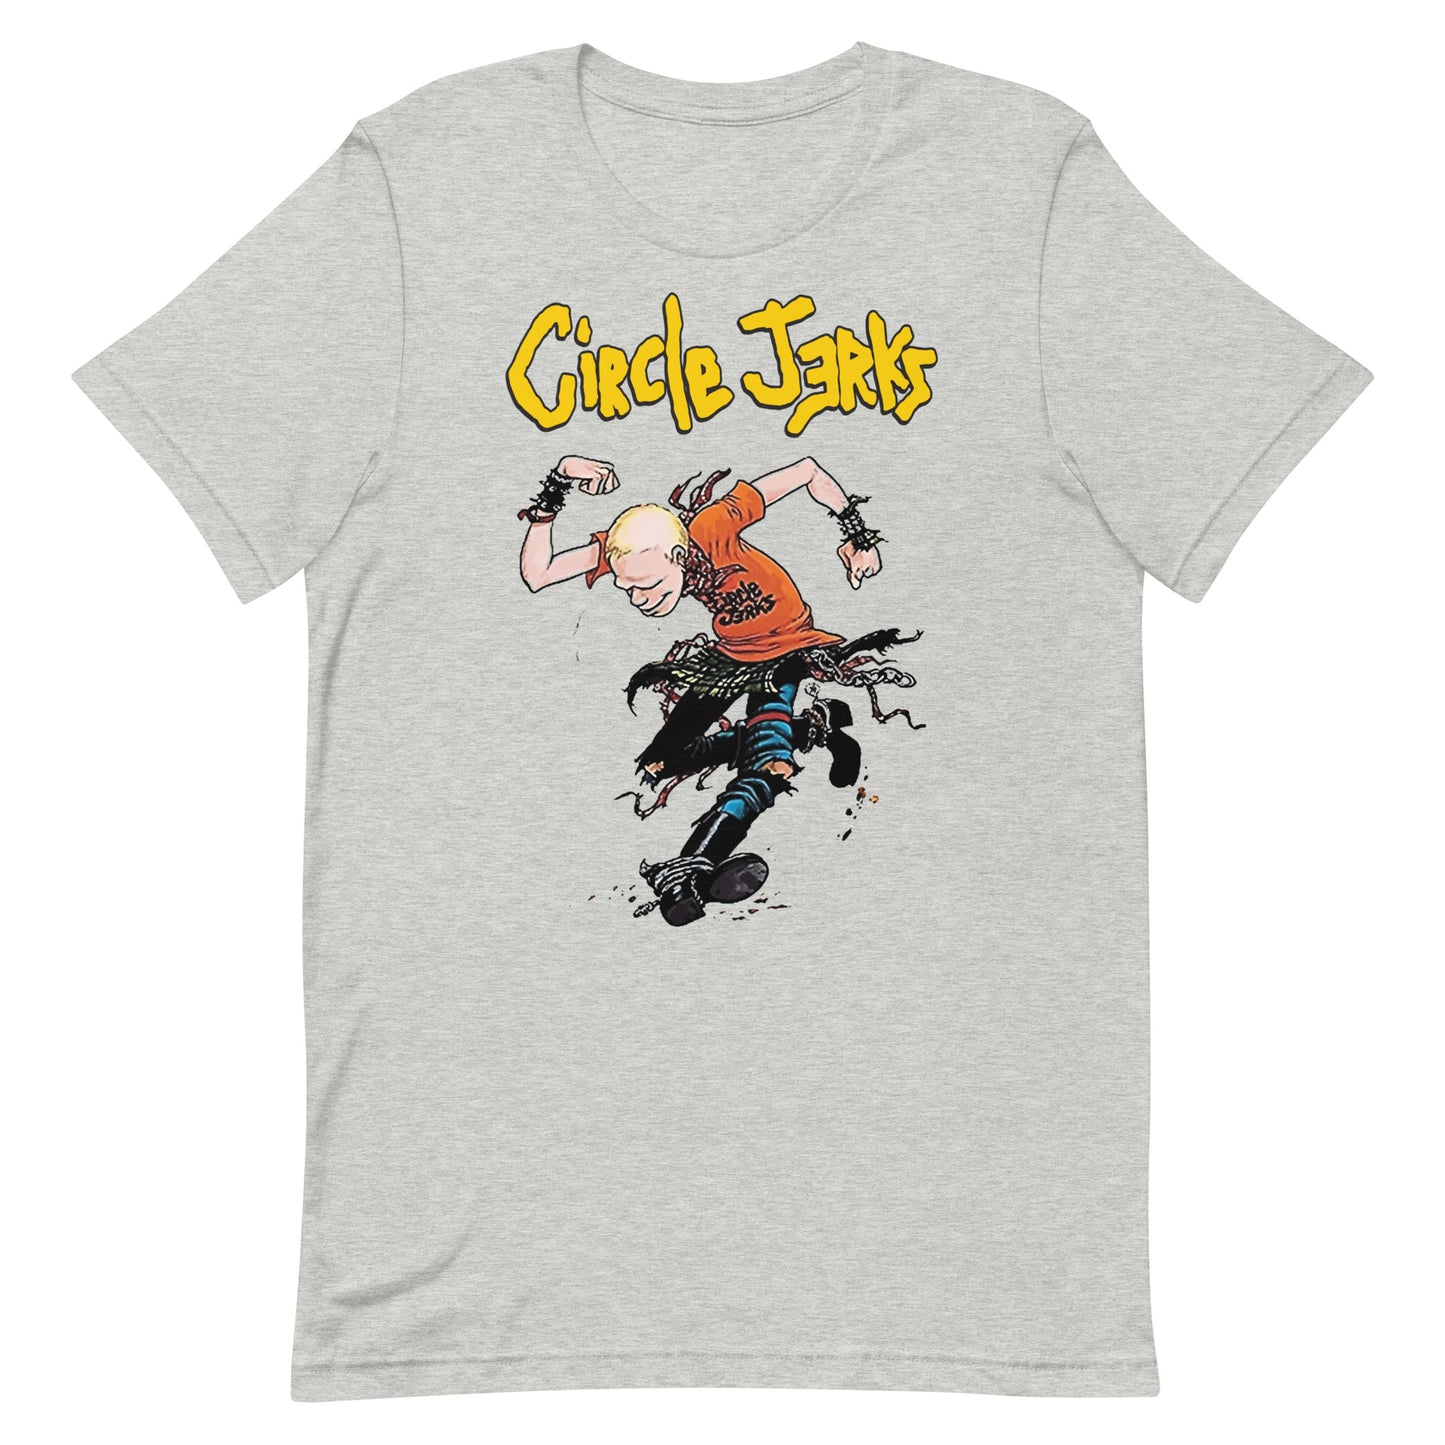 Circle Jerks - Skankin' Guy T-Shirt